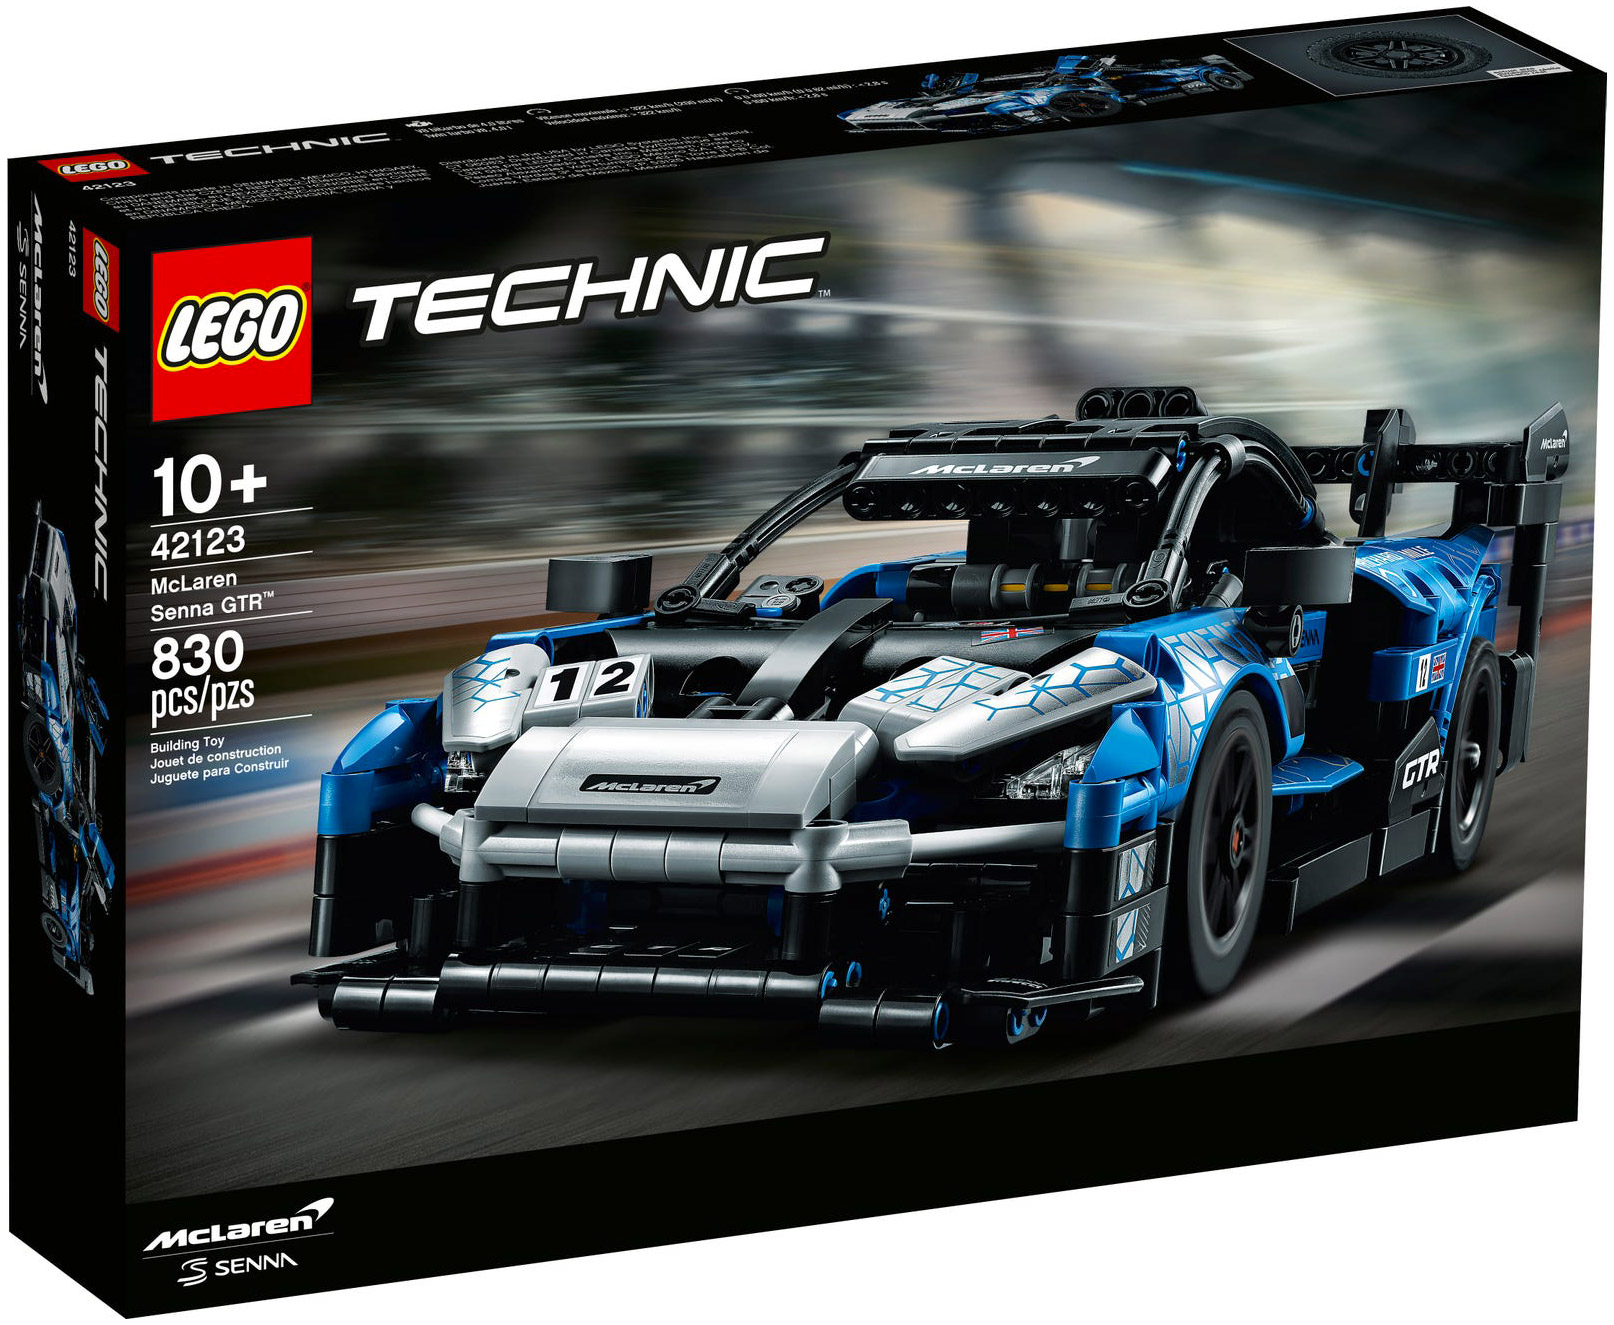 LEGO Technic 42123 pas cher, McLaren Senna GTR